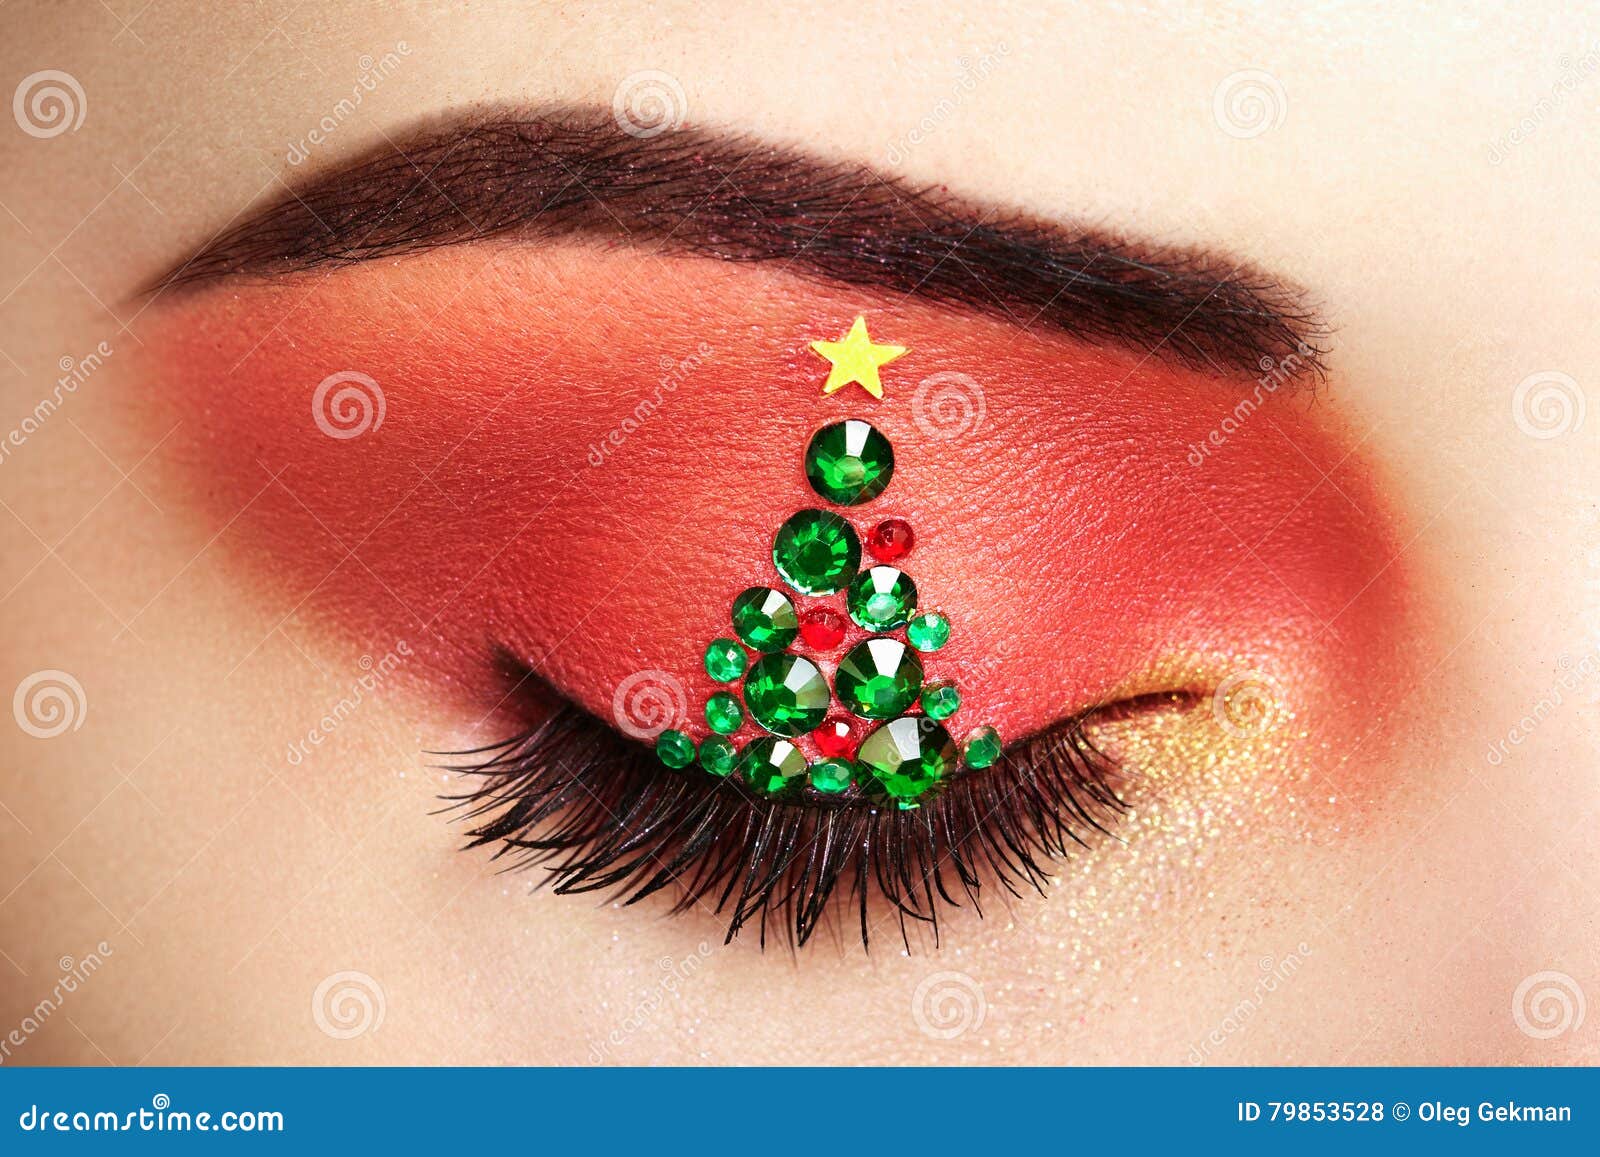 eye girl makeover christmas tree